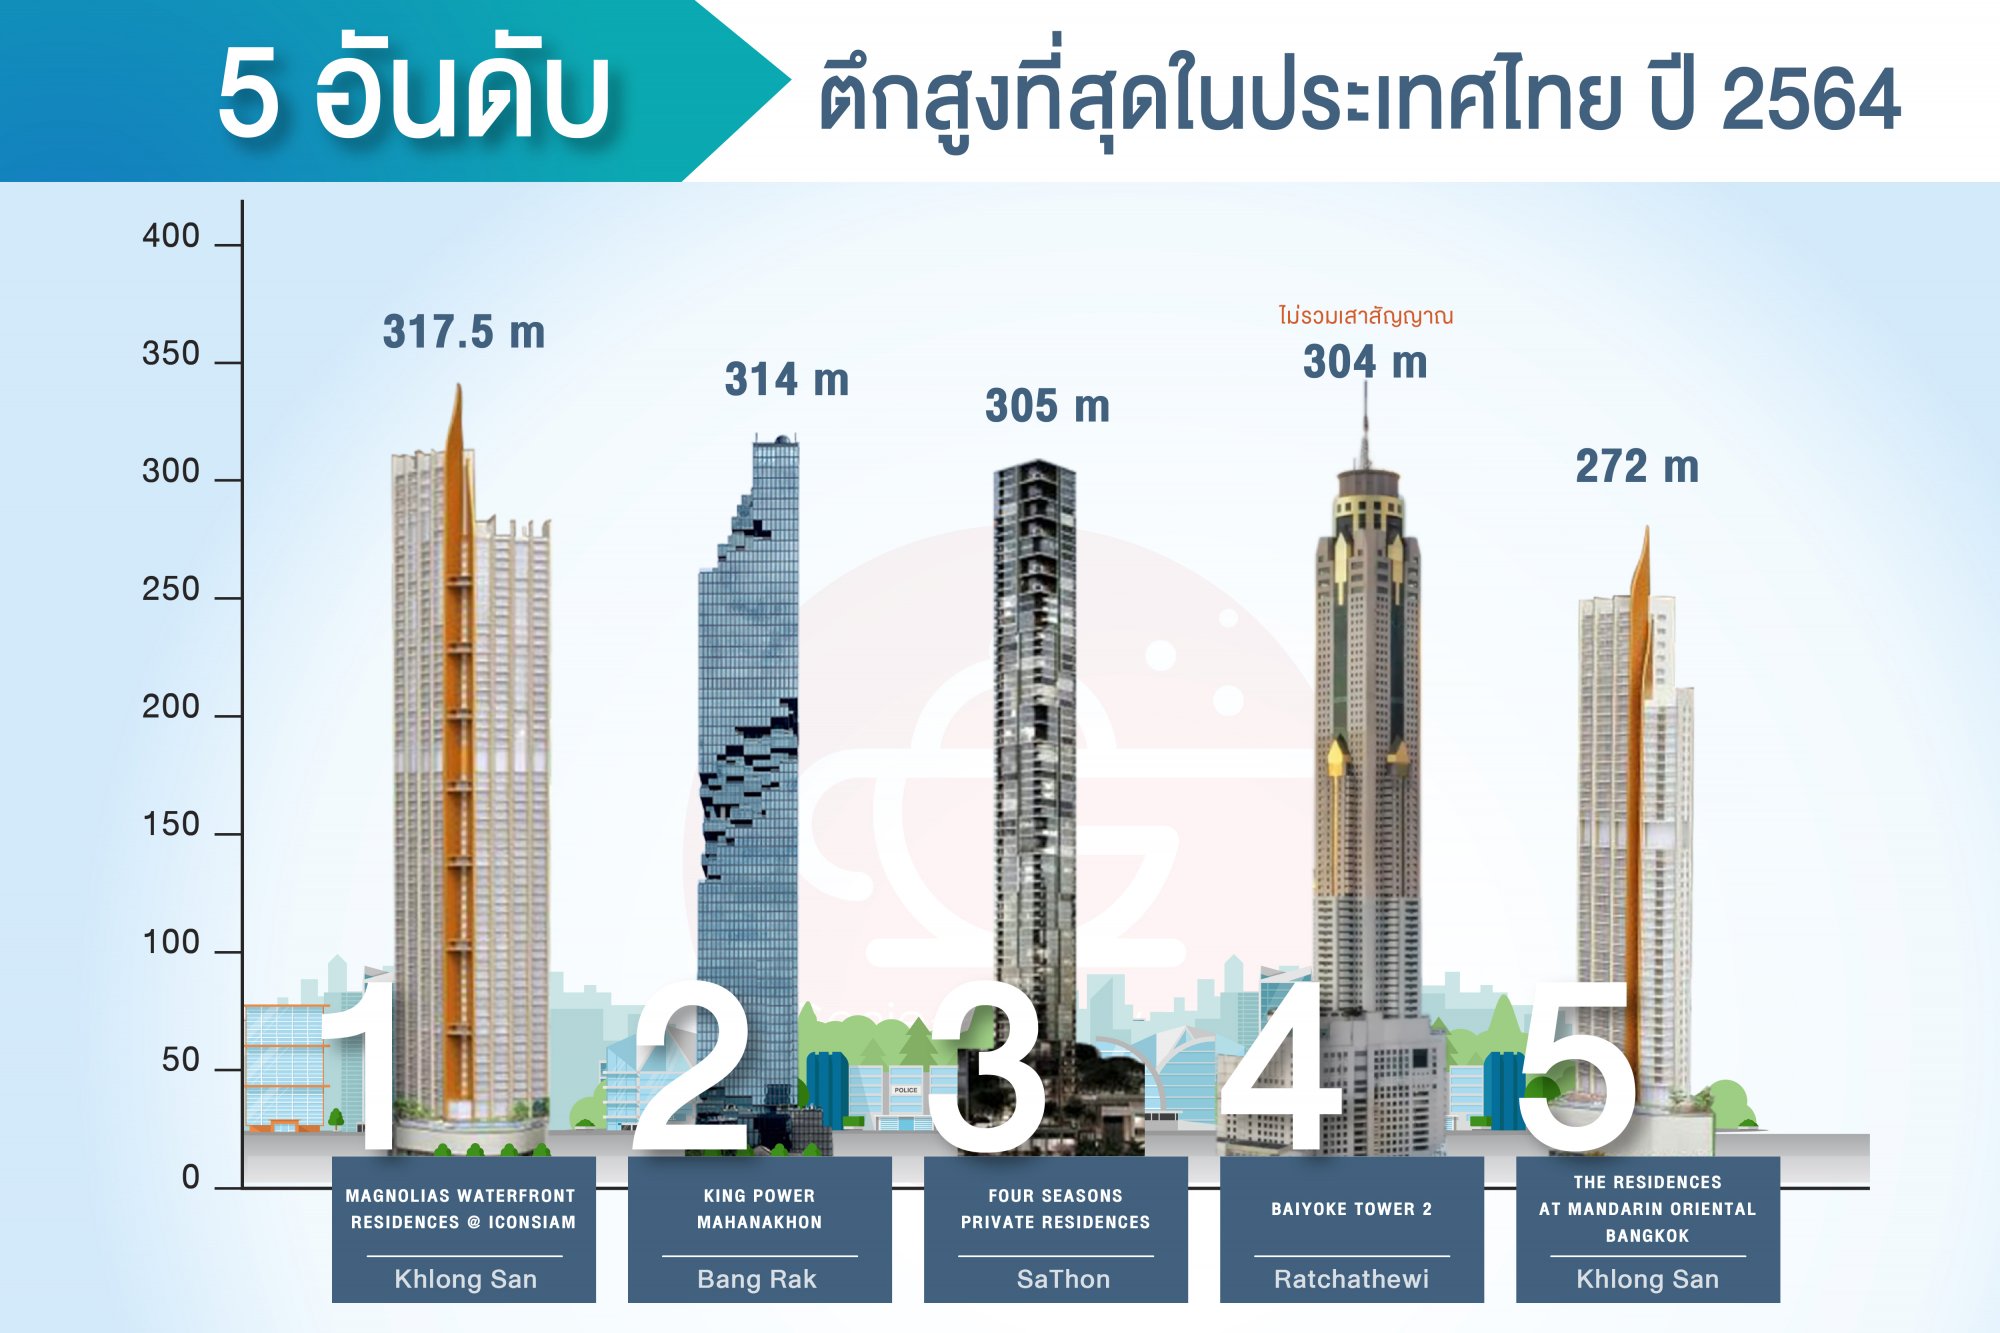 image for 5 อันดับ ตึกสูงที่สุดในประเทศไทย ปี 2564